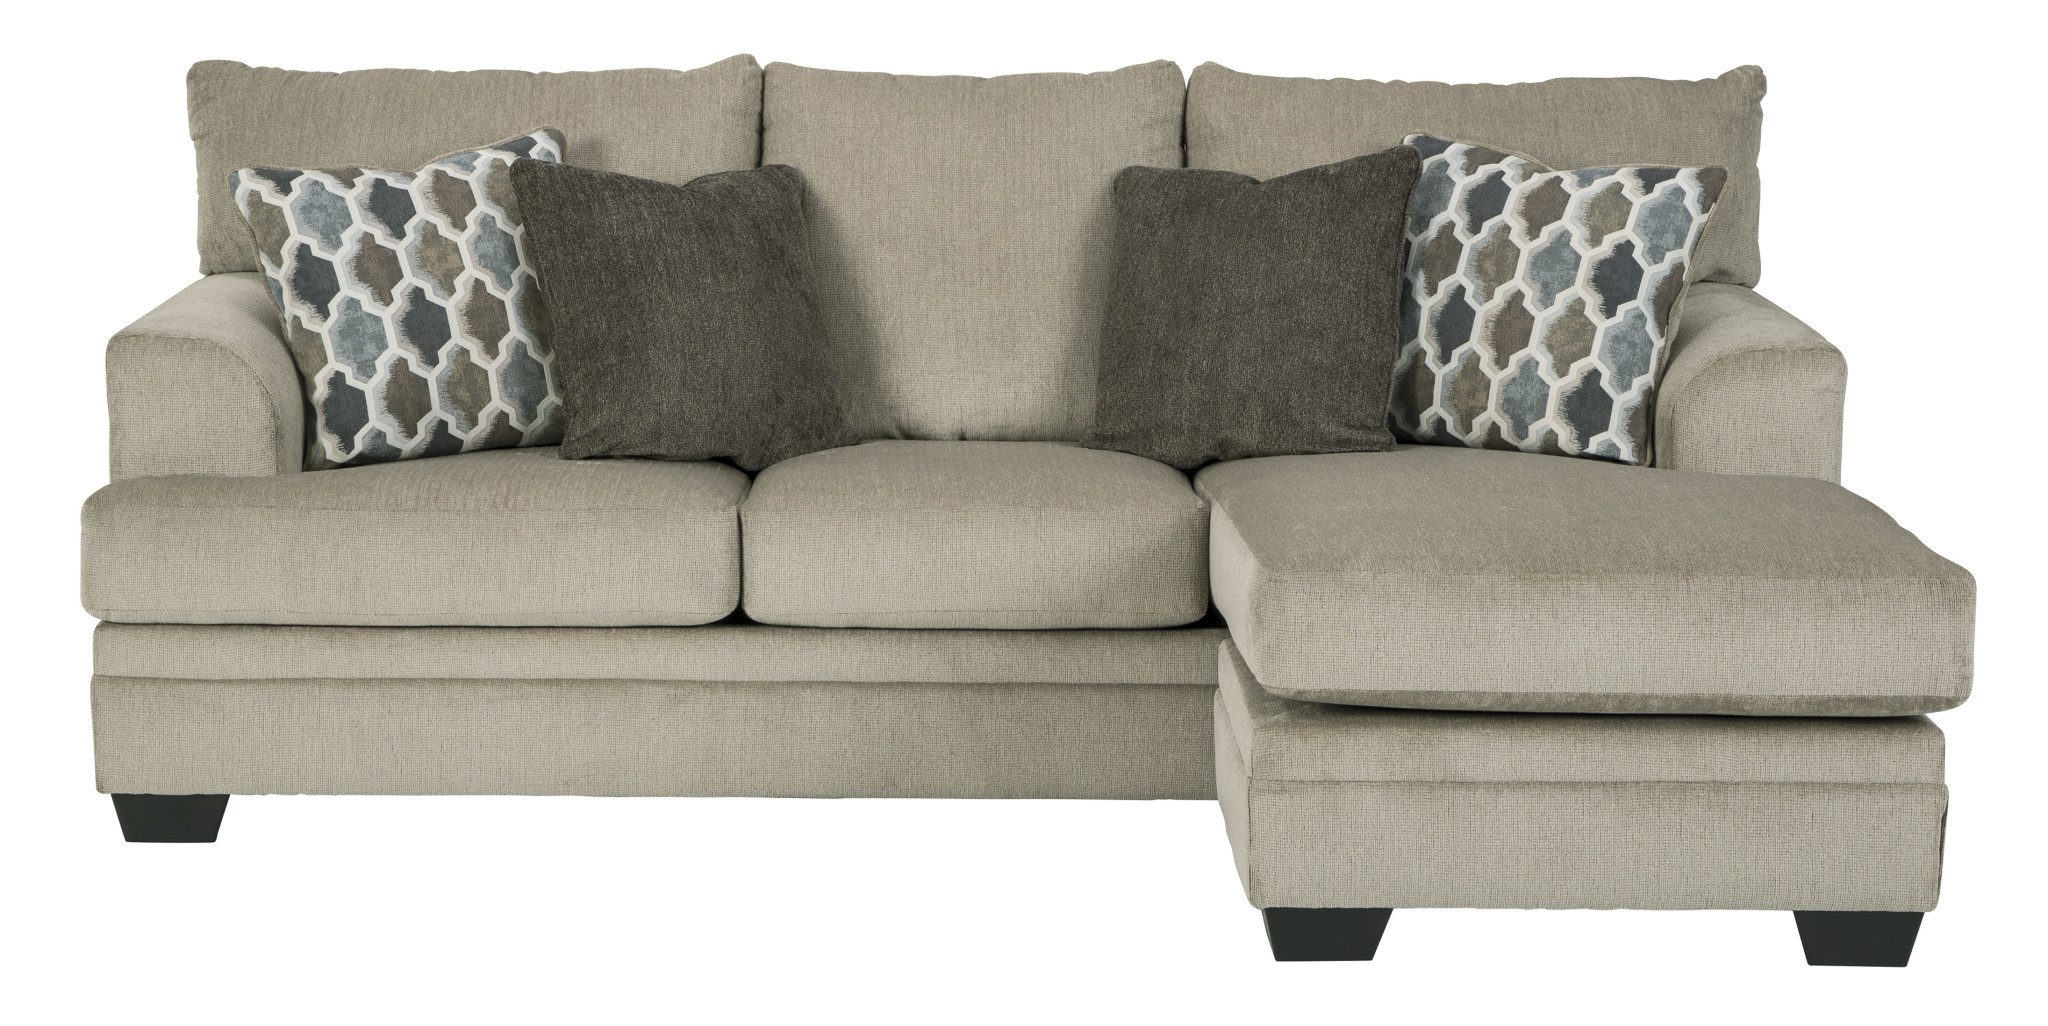 Signature Design "Dorsten" Reversible Sofa Chaise- "Sisal" Color- 7720518